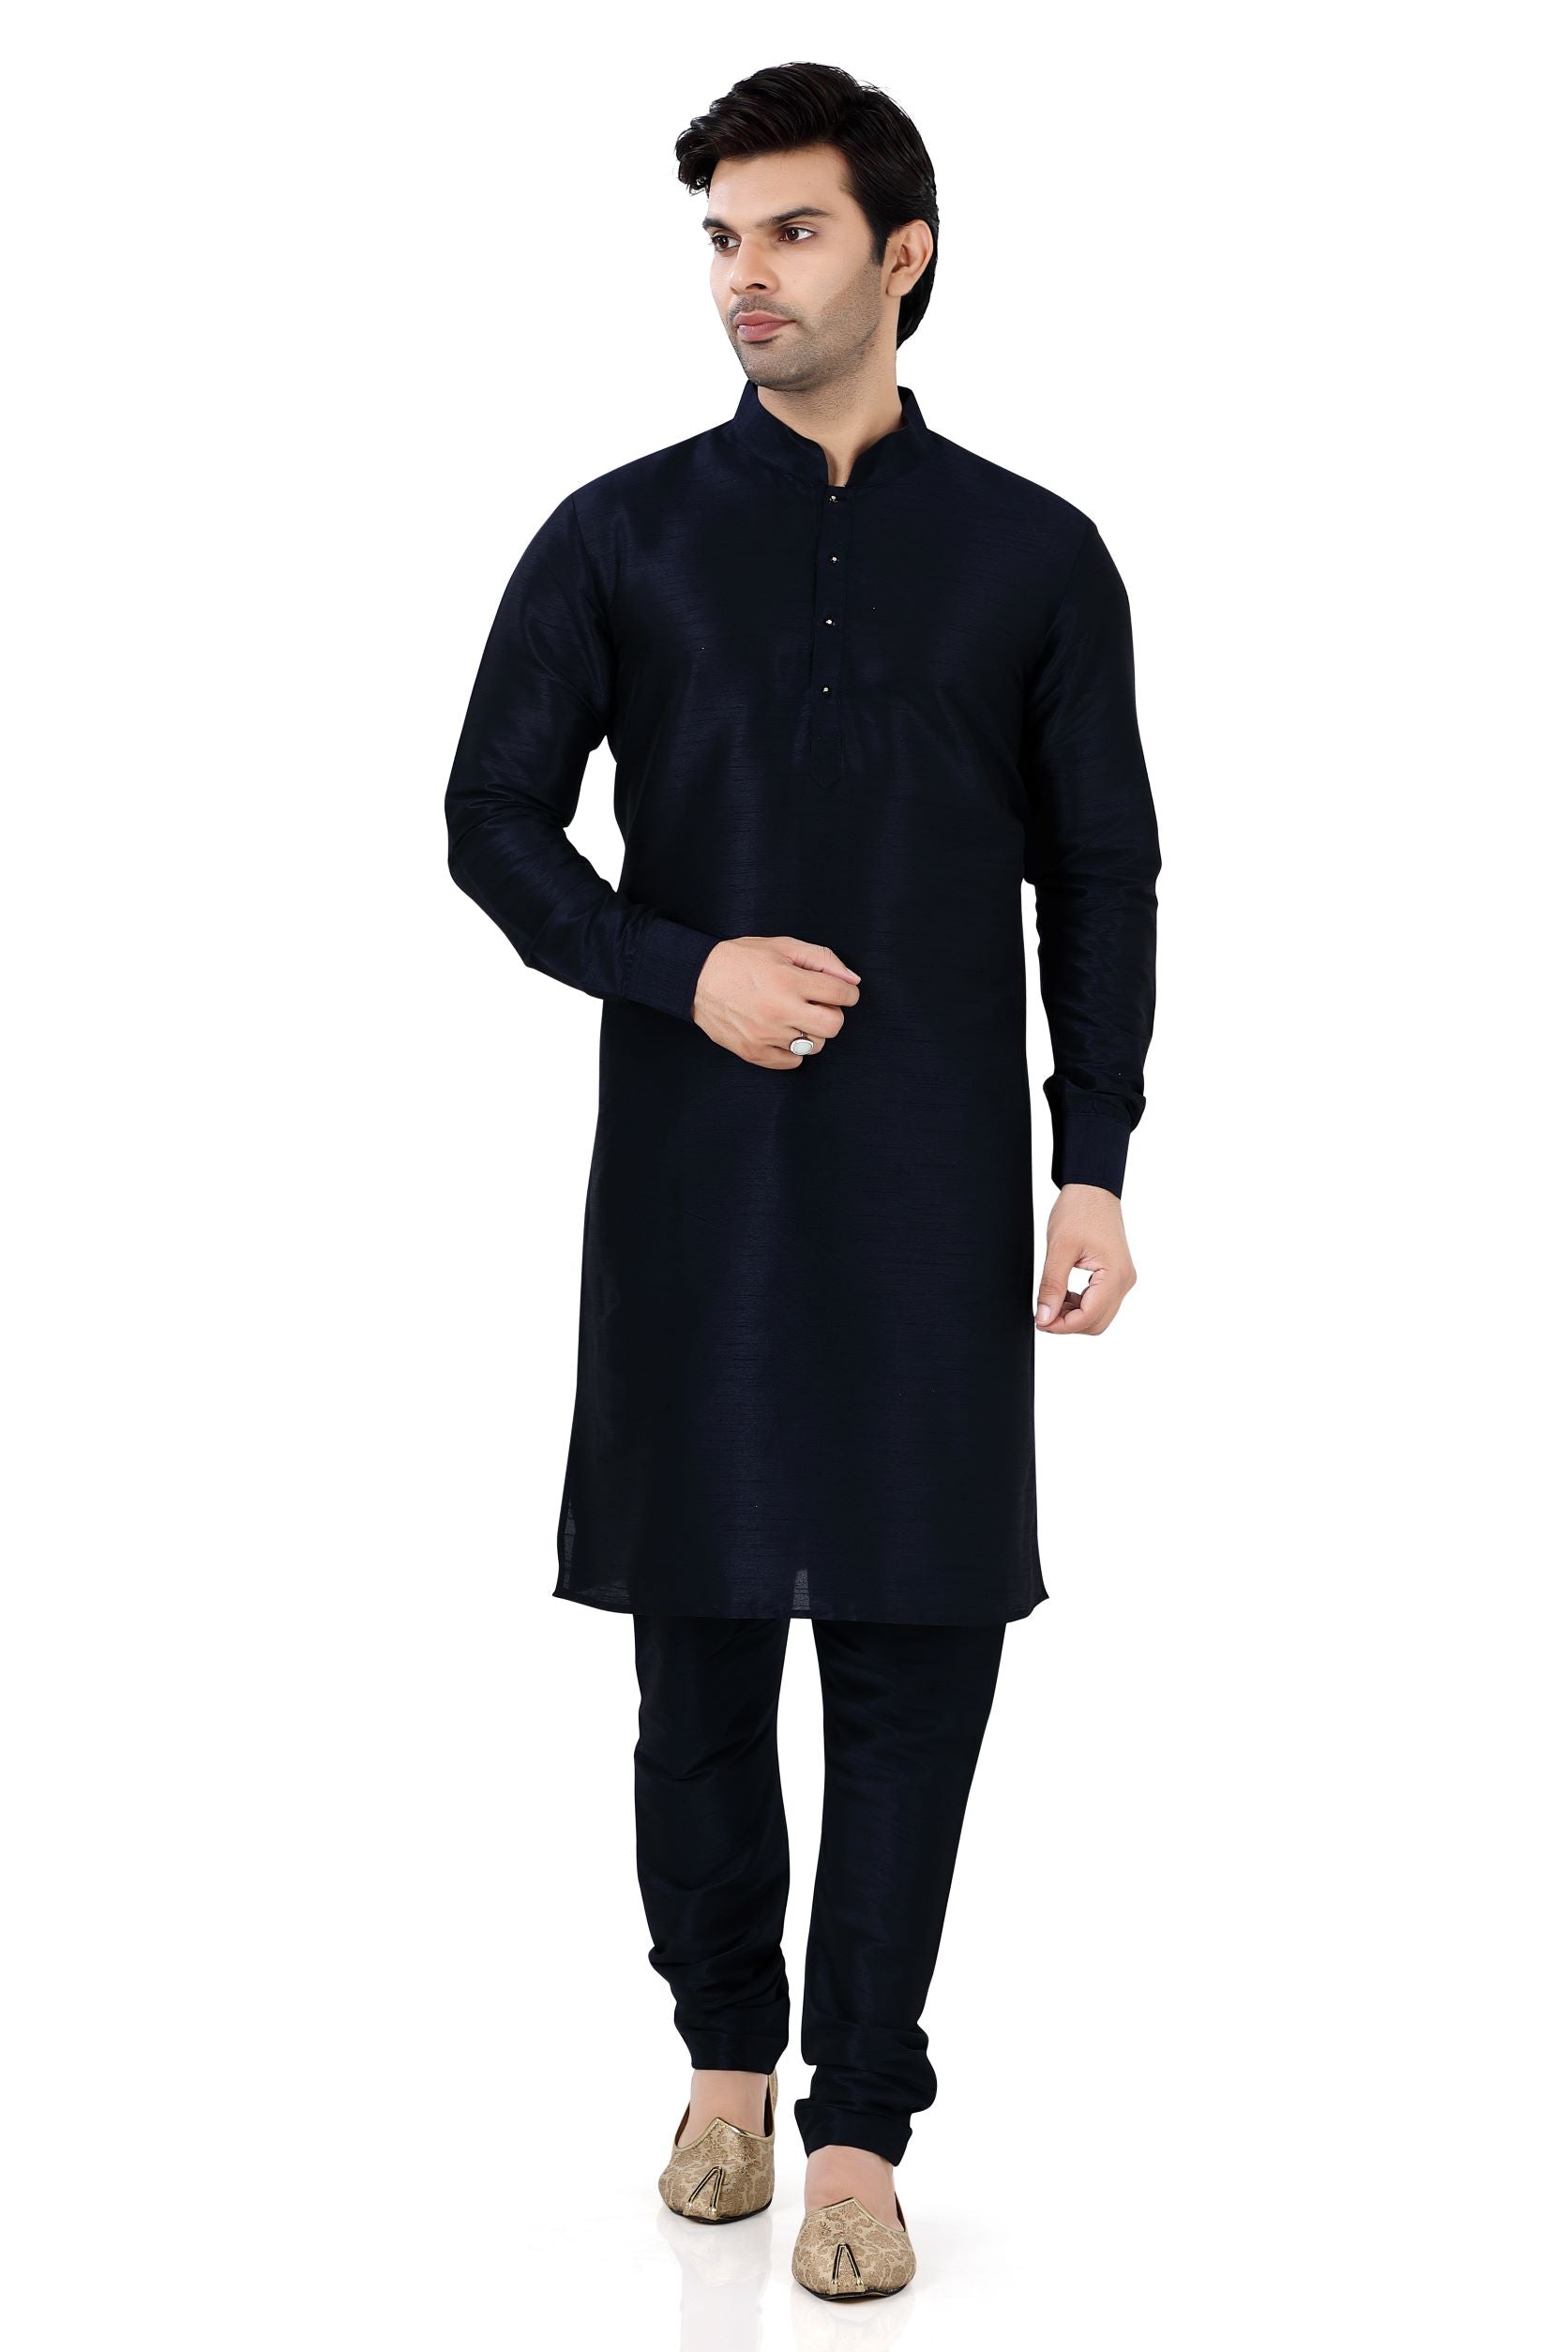 Dupion Silk Kurta in black - Premium kurta pajama from Dapper Ethnic - Just $29! Shop now at Dulhan Exclusives